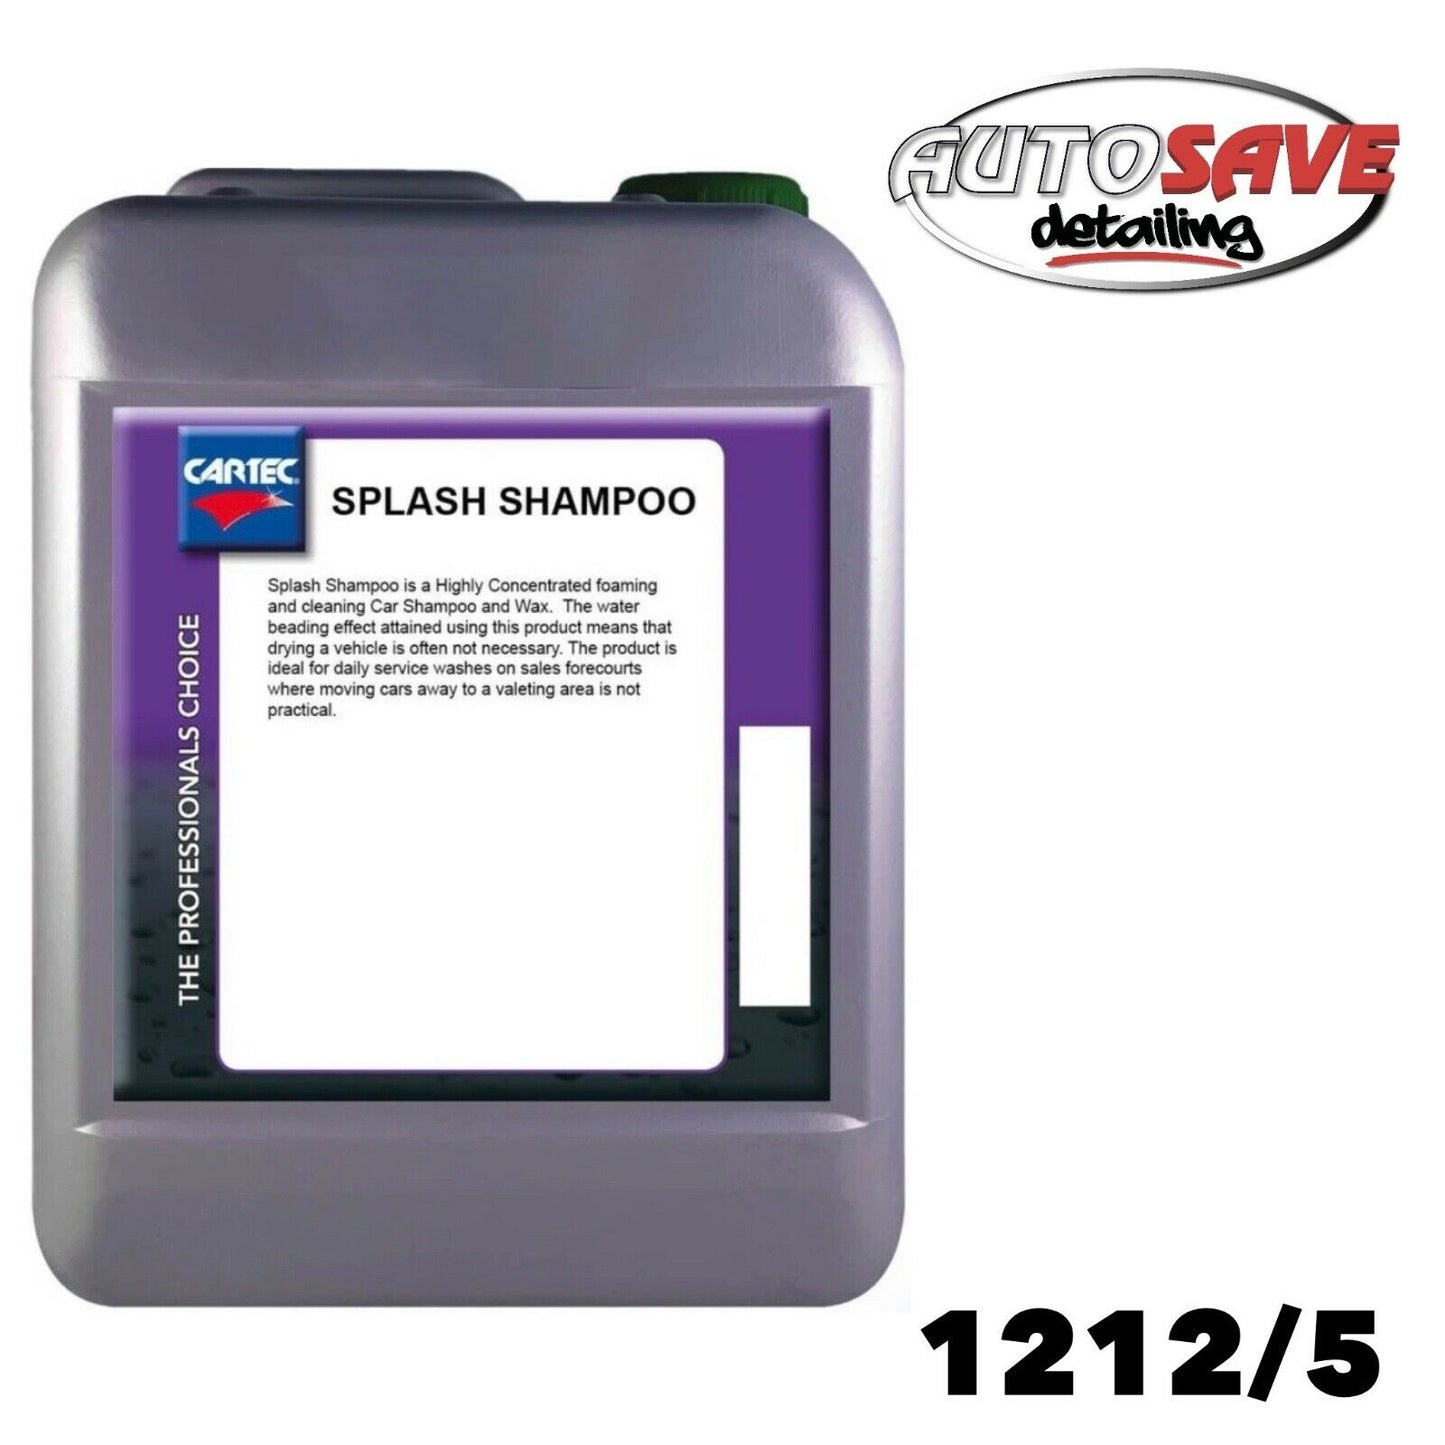 CARTEC 12121/5 SPLASH SHAMPOO - NEW FORMULA - EXTREME WAX SHAMPOO